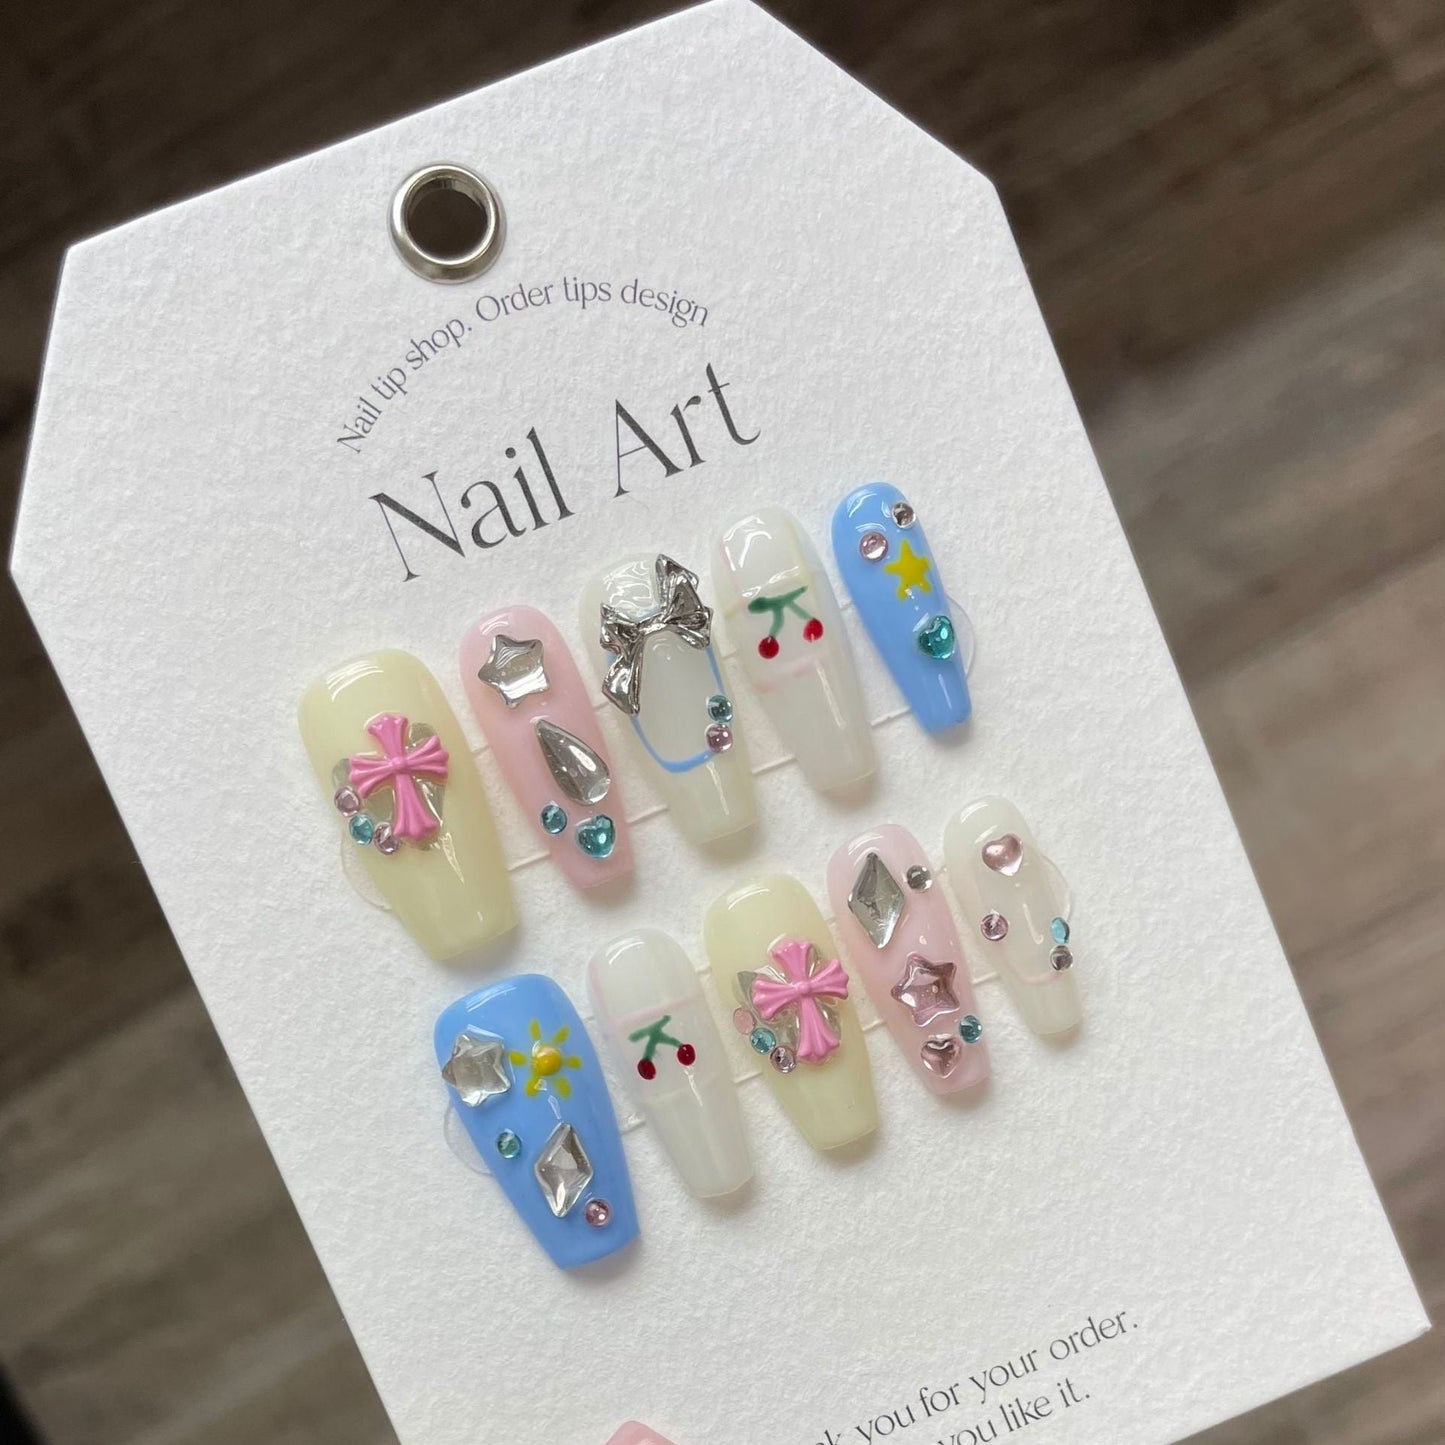 947 Sweet Cherry style press on nails 100% handmade false nails pink white blue